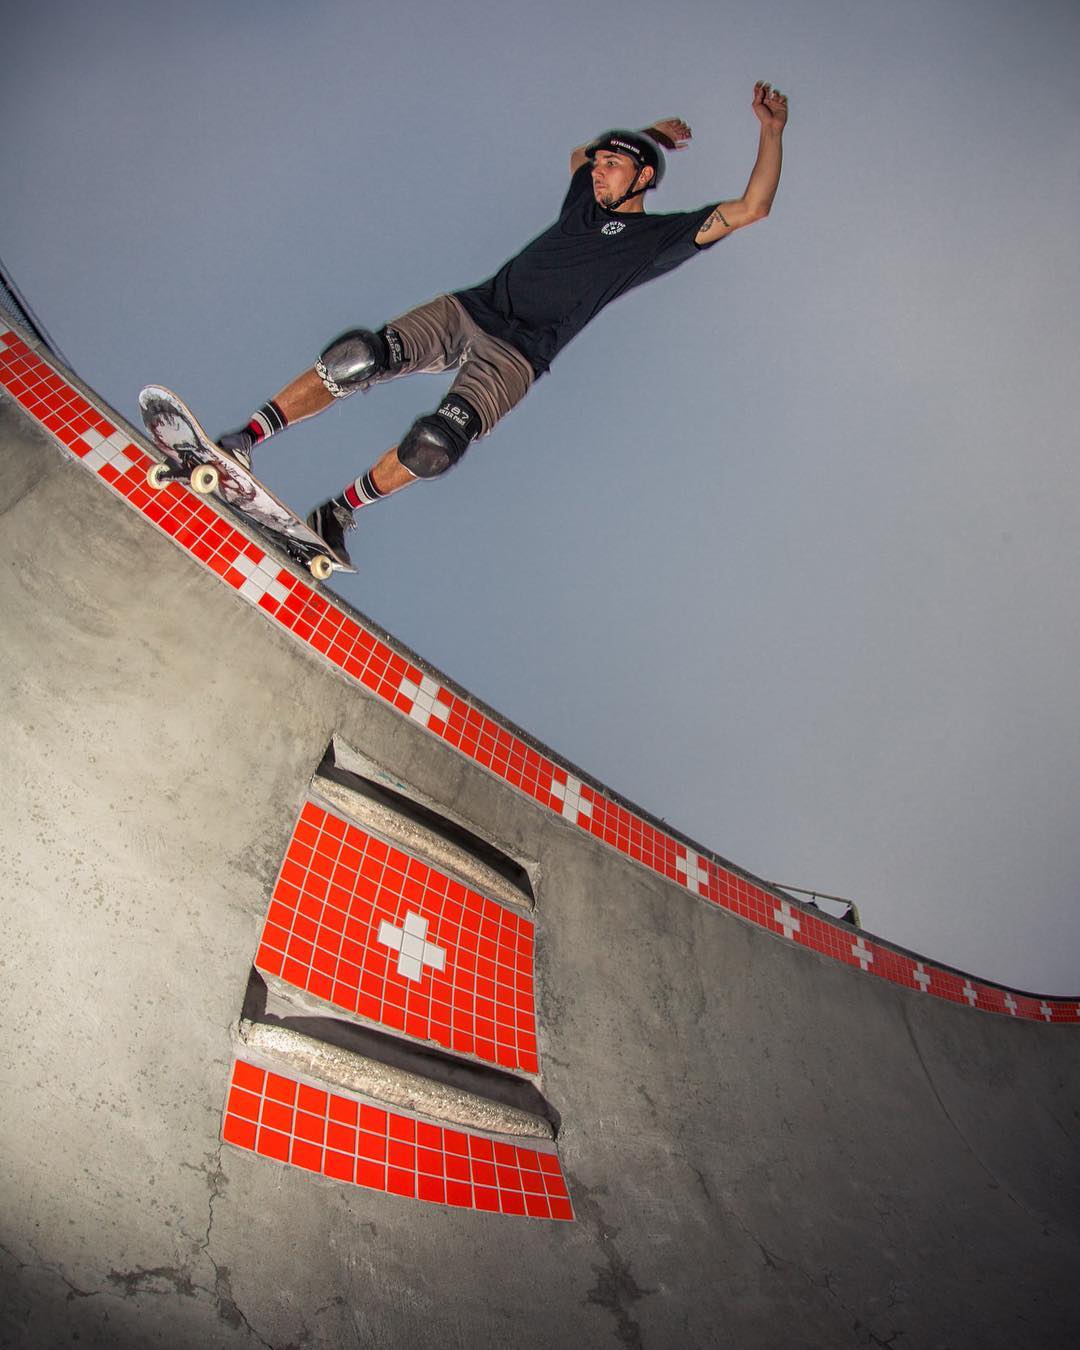 #flashbackfriday Daniel Cuervo Monty grind over the stairs at the Encinitas Y a few years ago. #skateboarding #pool #bowl #concrete #montygrind #encinitas #ymca #bailgun #gerdriegerphotography